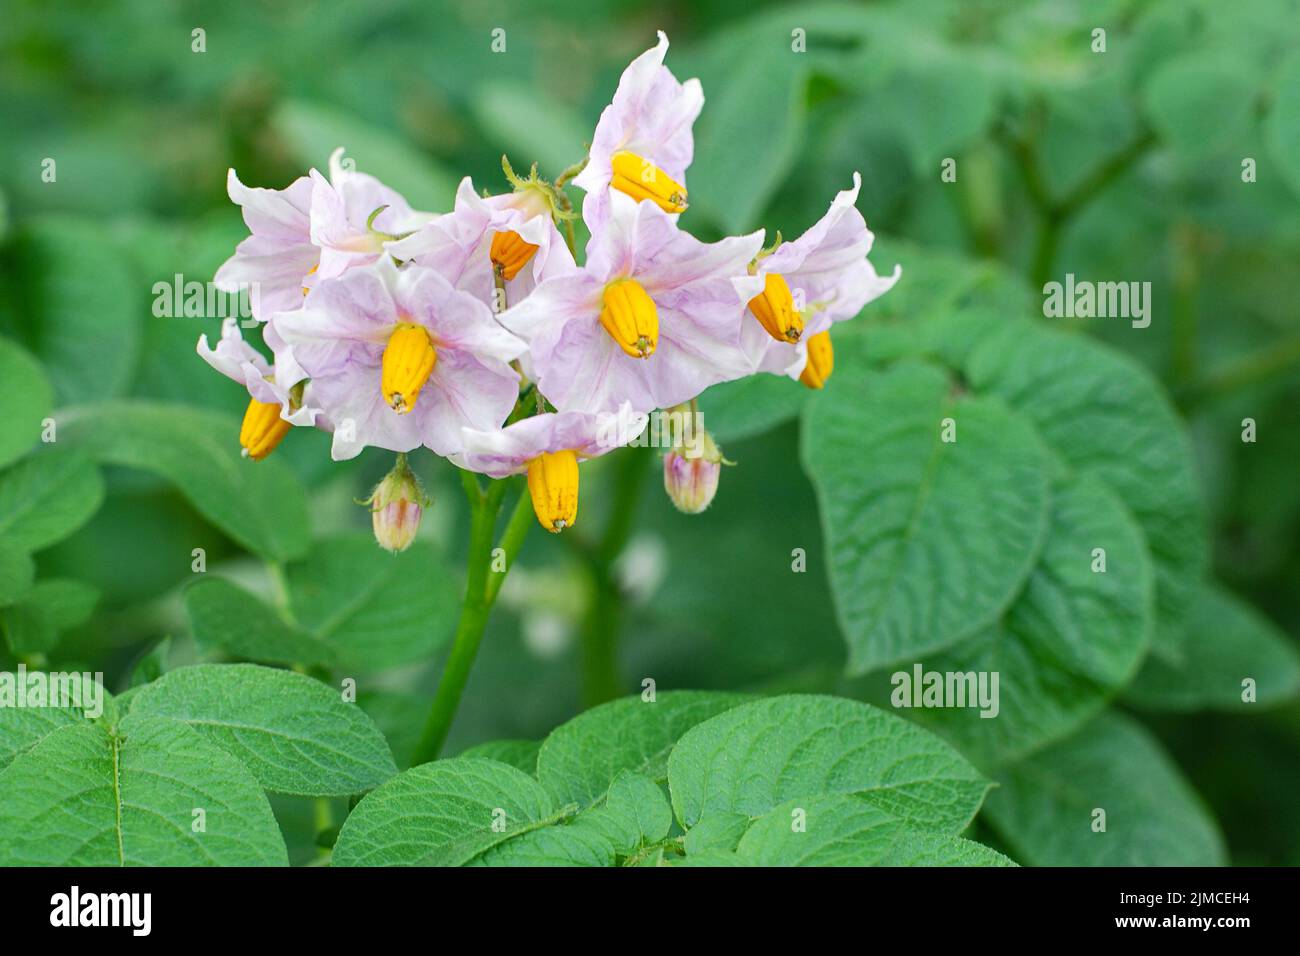 Blooming potato plant close up Stock Photo